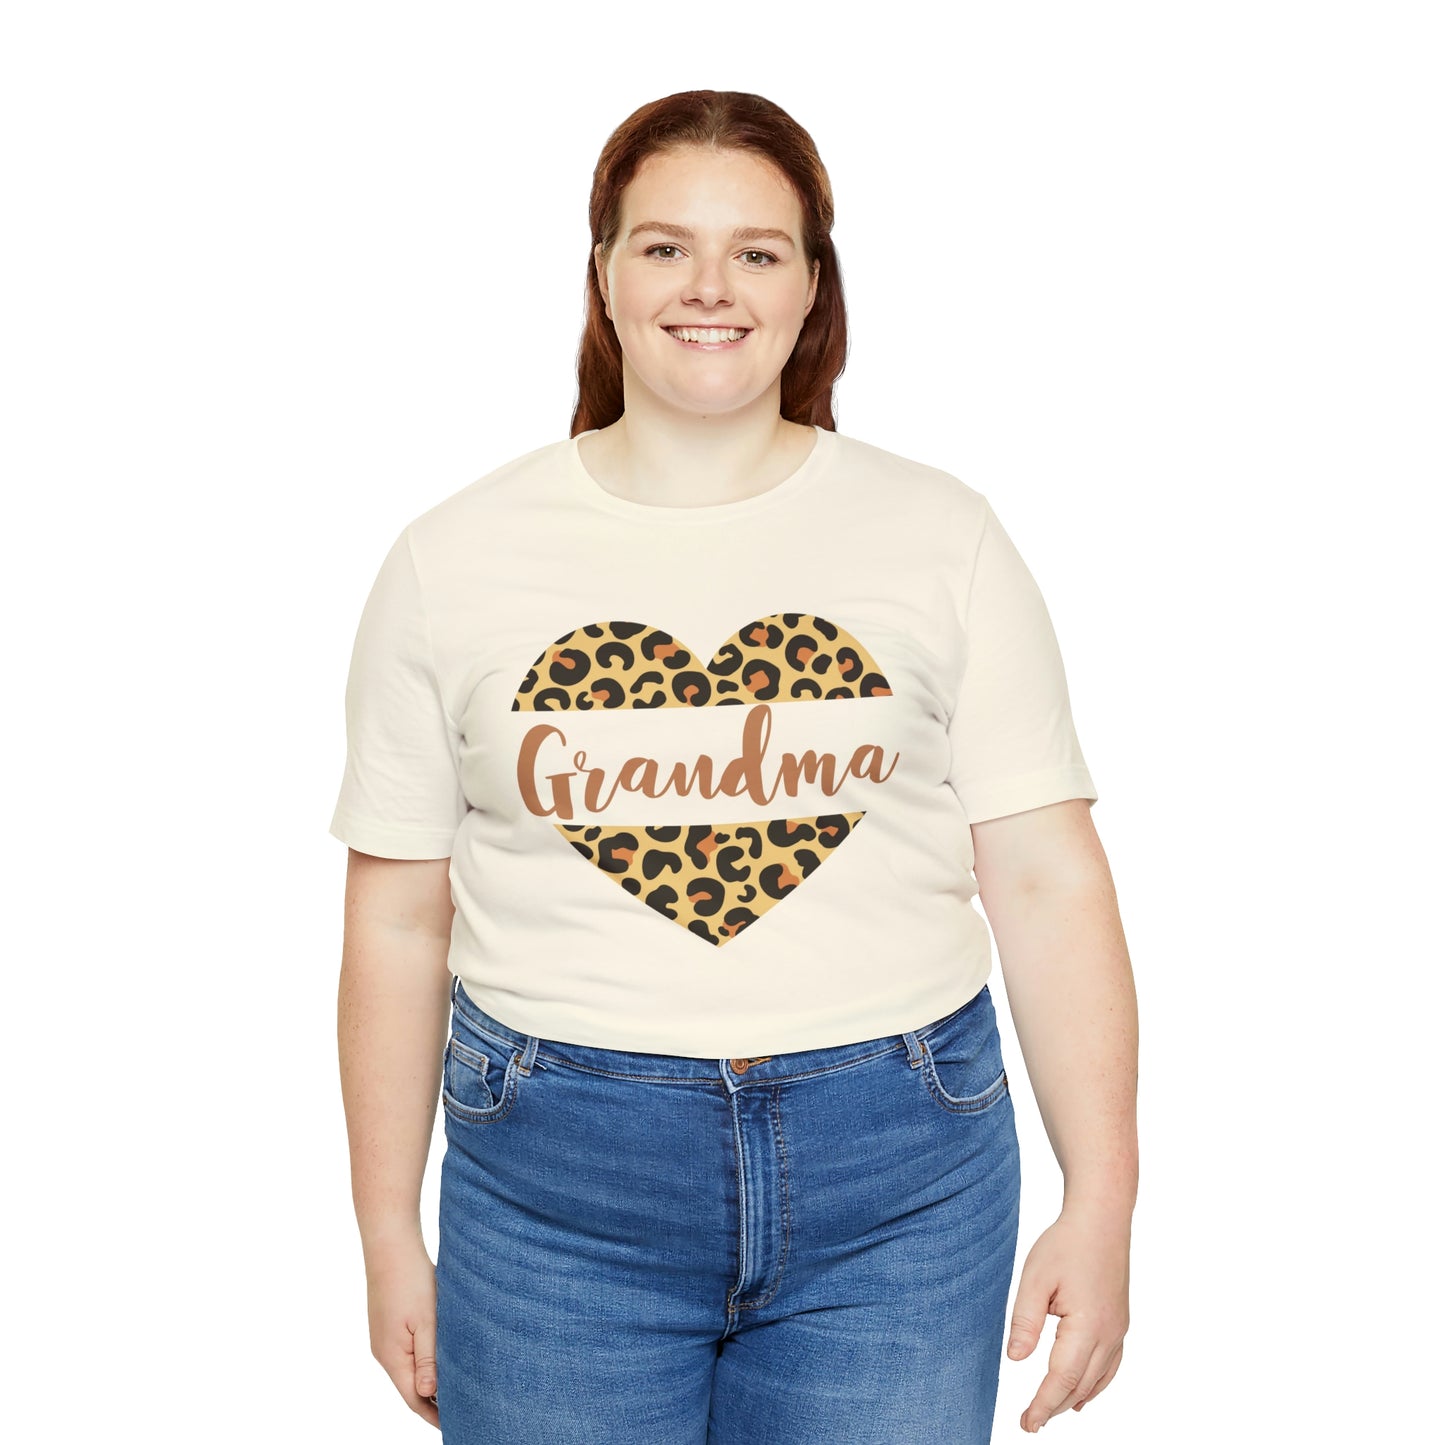 Grandma Leopard Heart  Shirt, Mother's Day Gift for Grandma, Cute Grandma Shirt, Grandma Present, Grandma Birthday